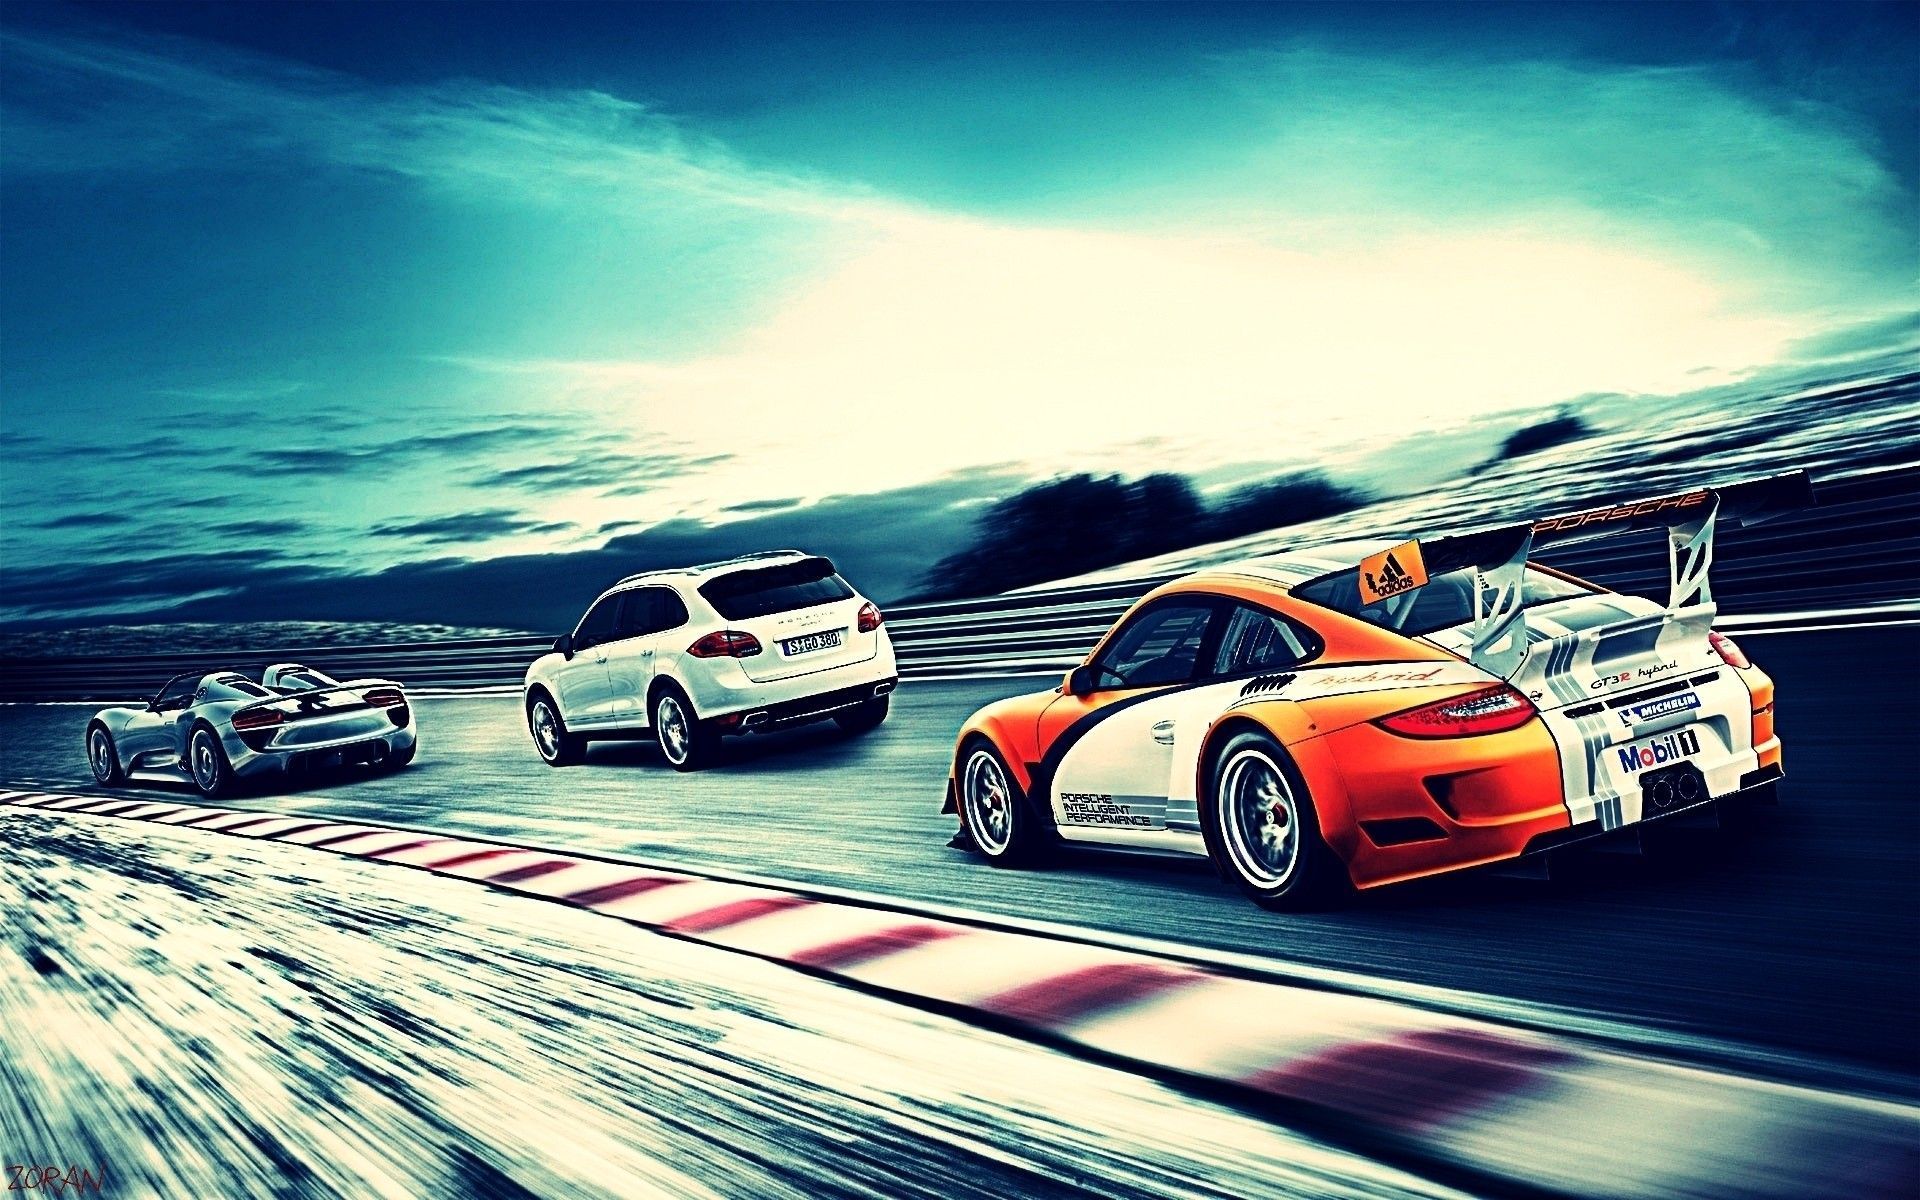 Porsche Sports Car Wallpaper Images Gallery #4451o0wfzq - Ehiyo.com